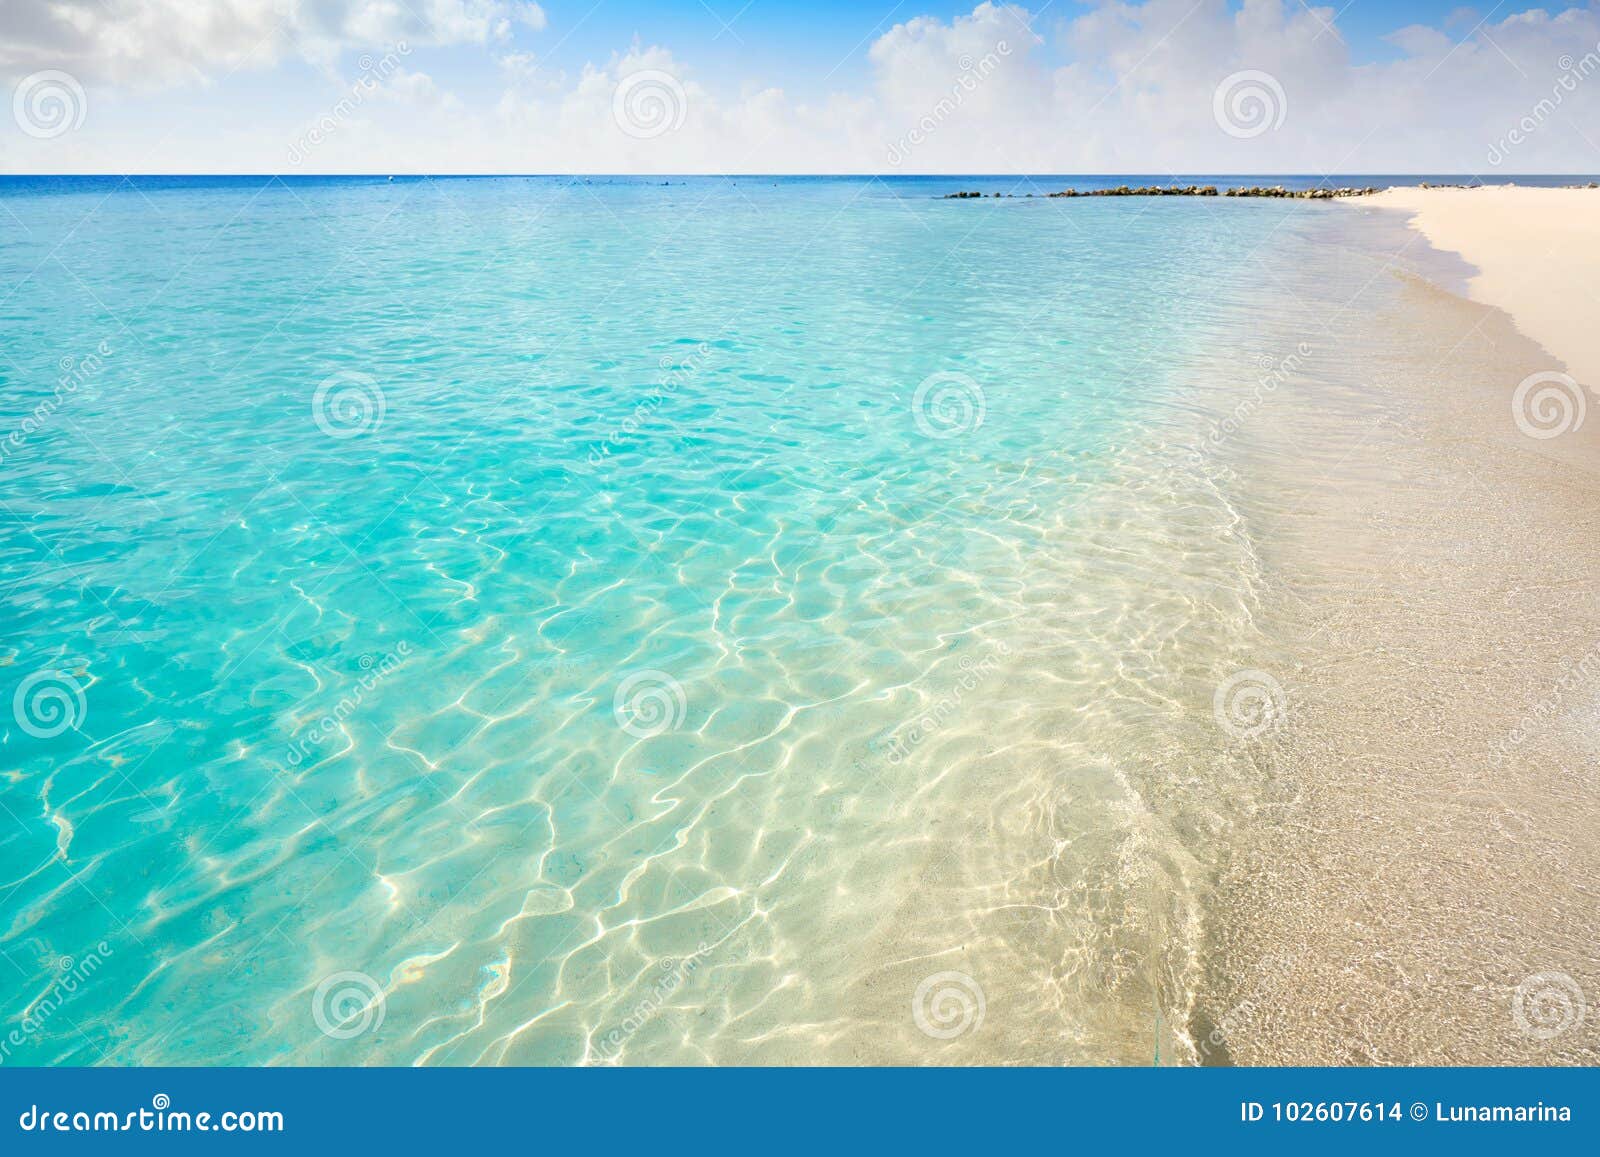 cozumel island palancar beach riviera maya